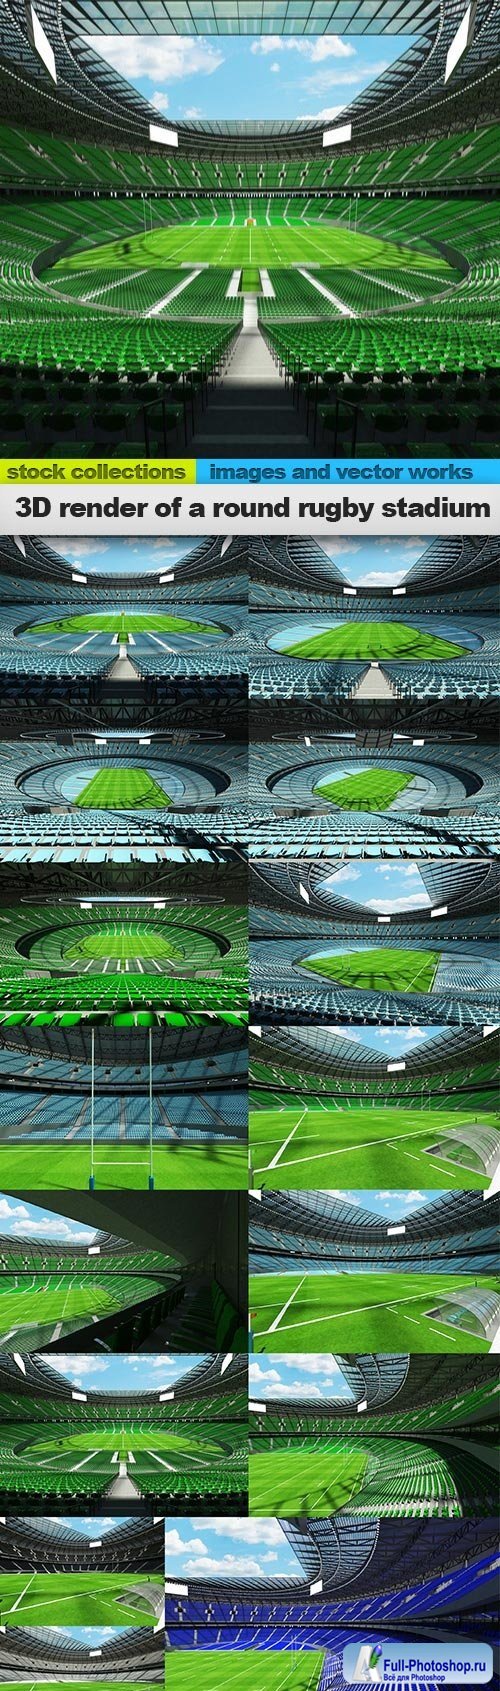 3D render of a round rugby stadium, 15 x UHQ JPEG